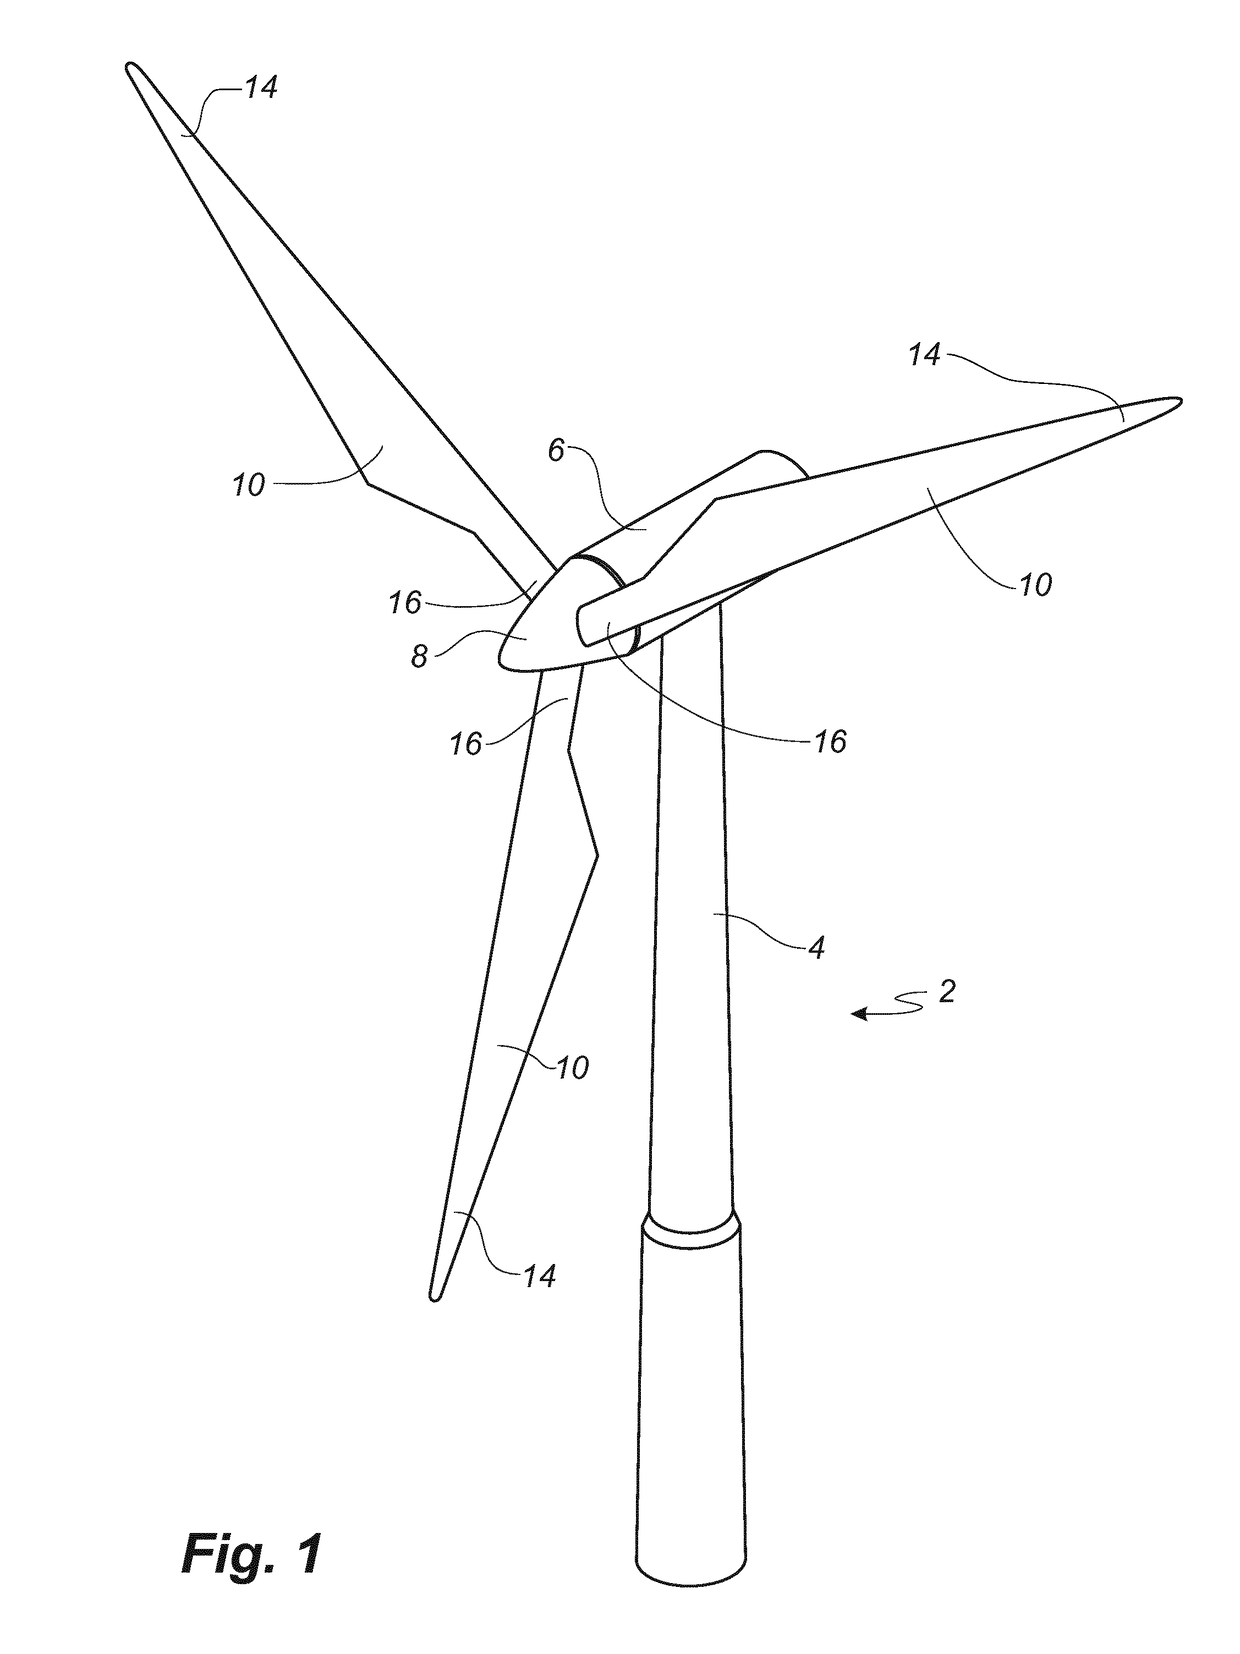 An aeroshell extender piece for a wind turbine blade